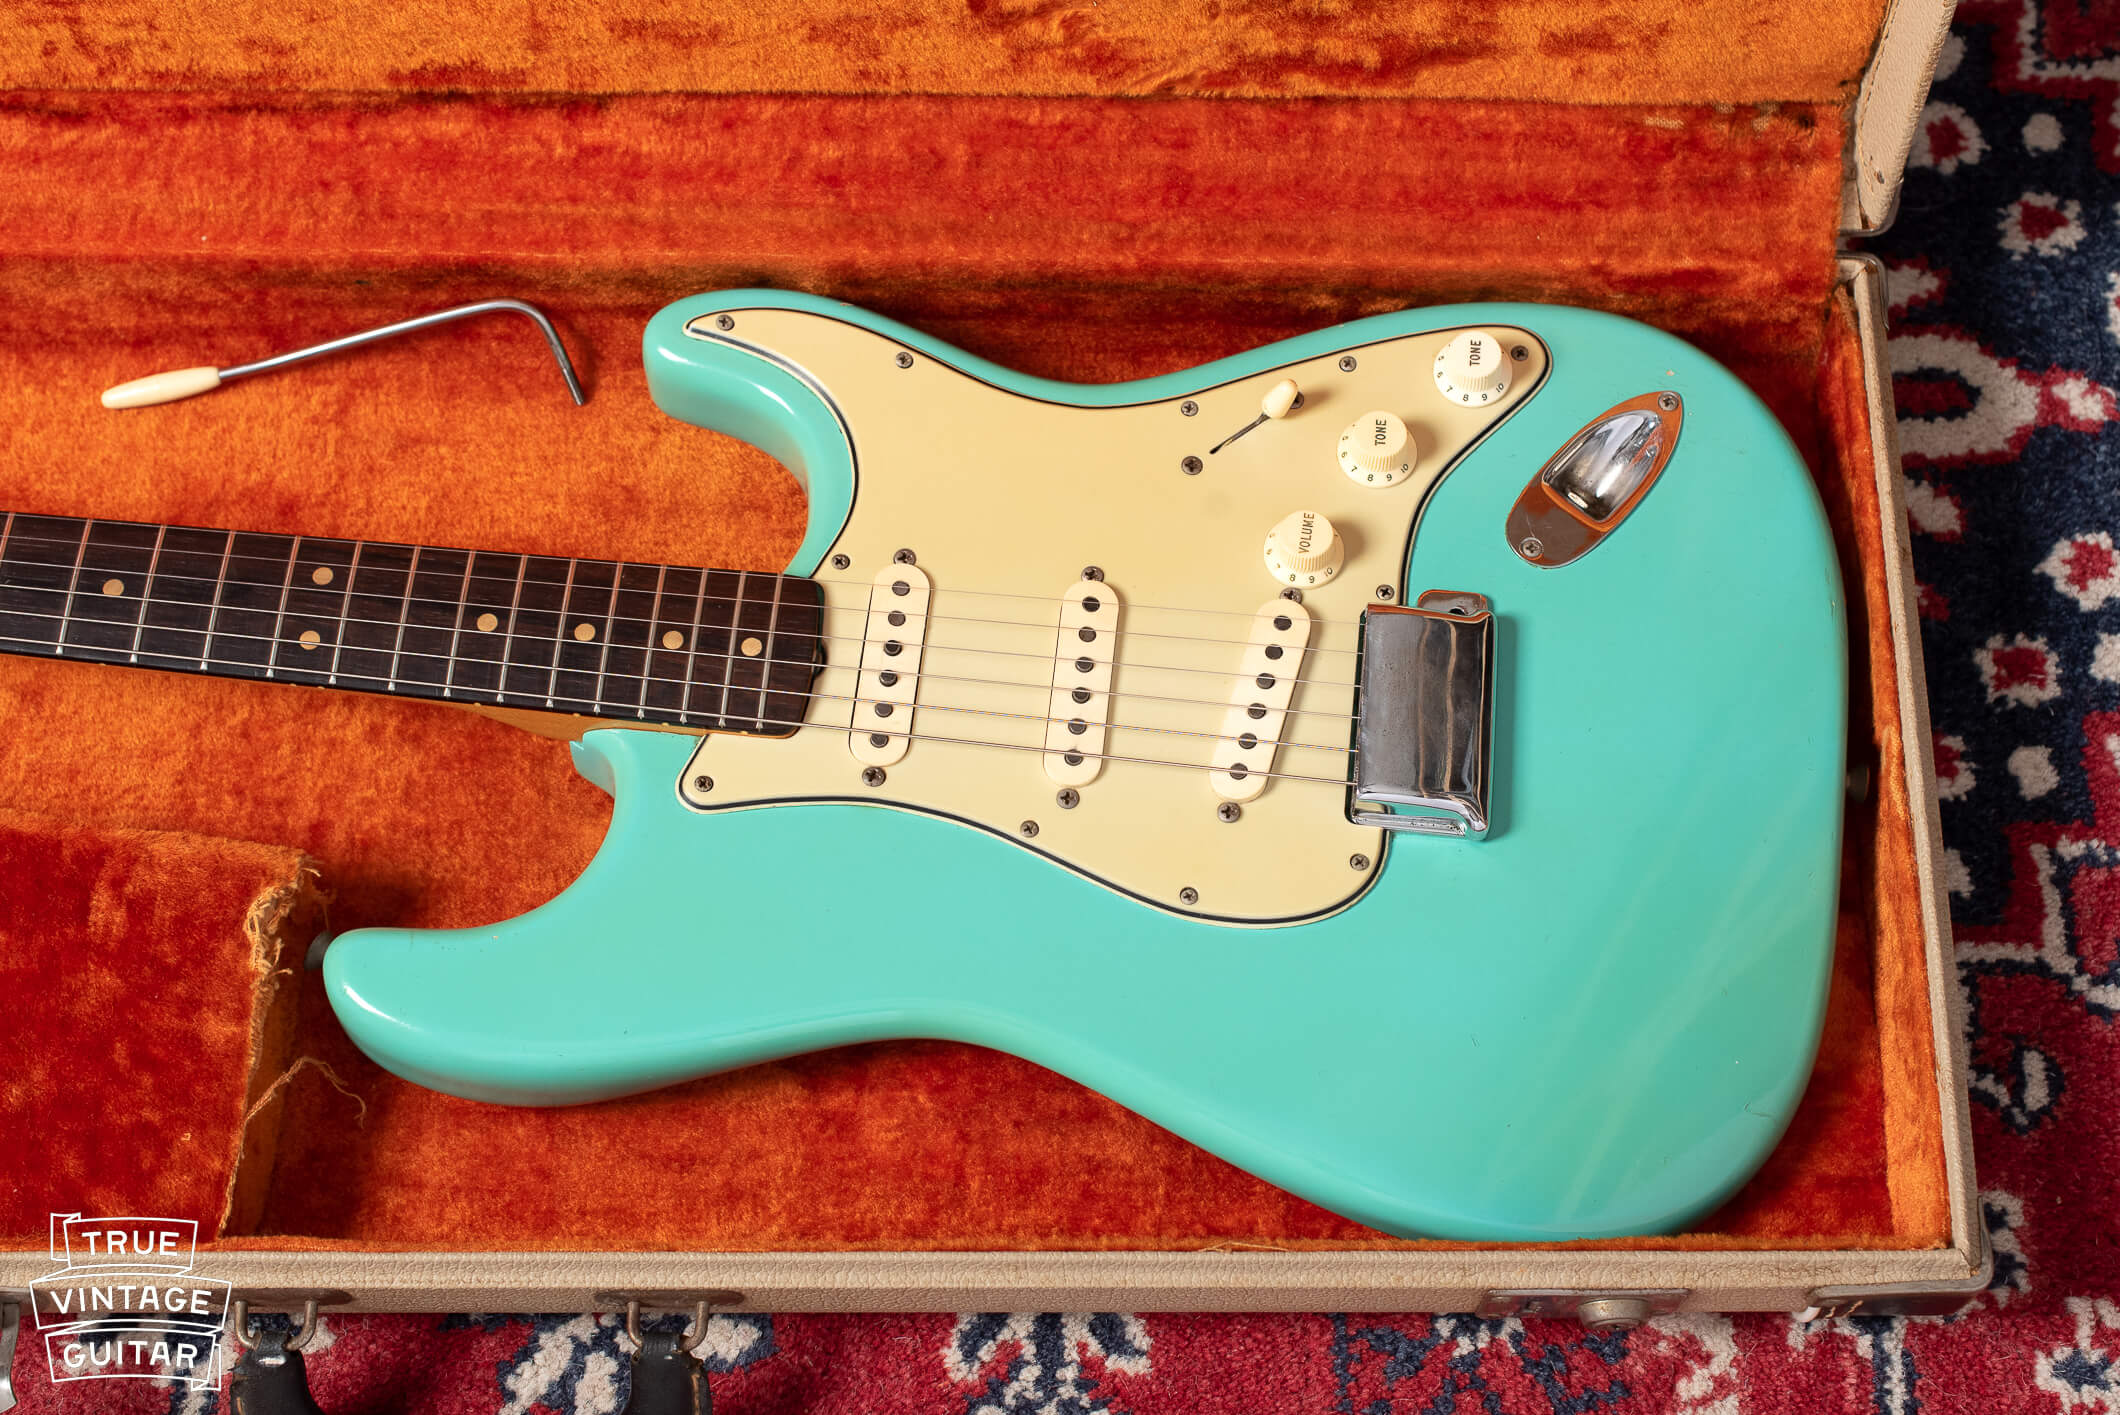 1964 Fender Stratocaster photo gallery